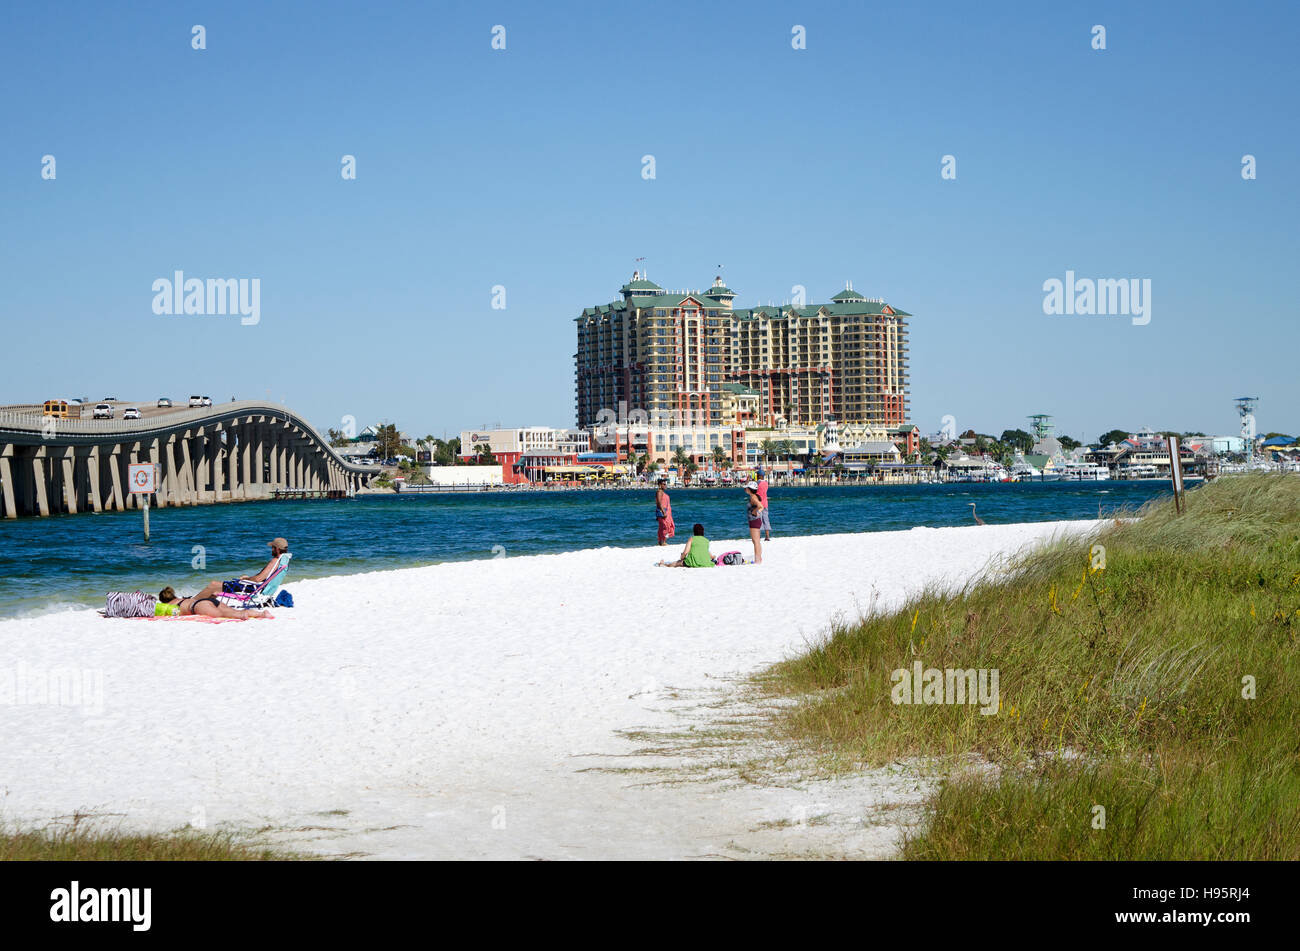 Summertime on the beach in Destin Florida Stock Photo - Alamy